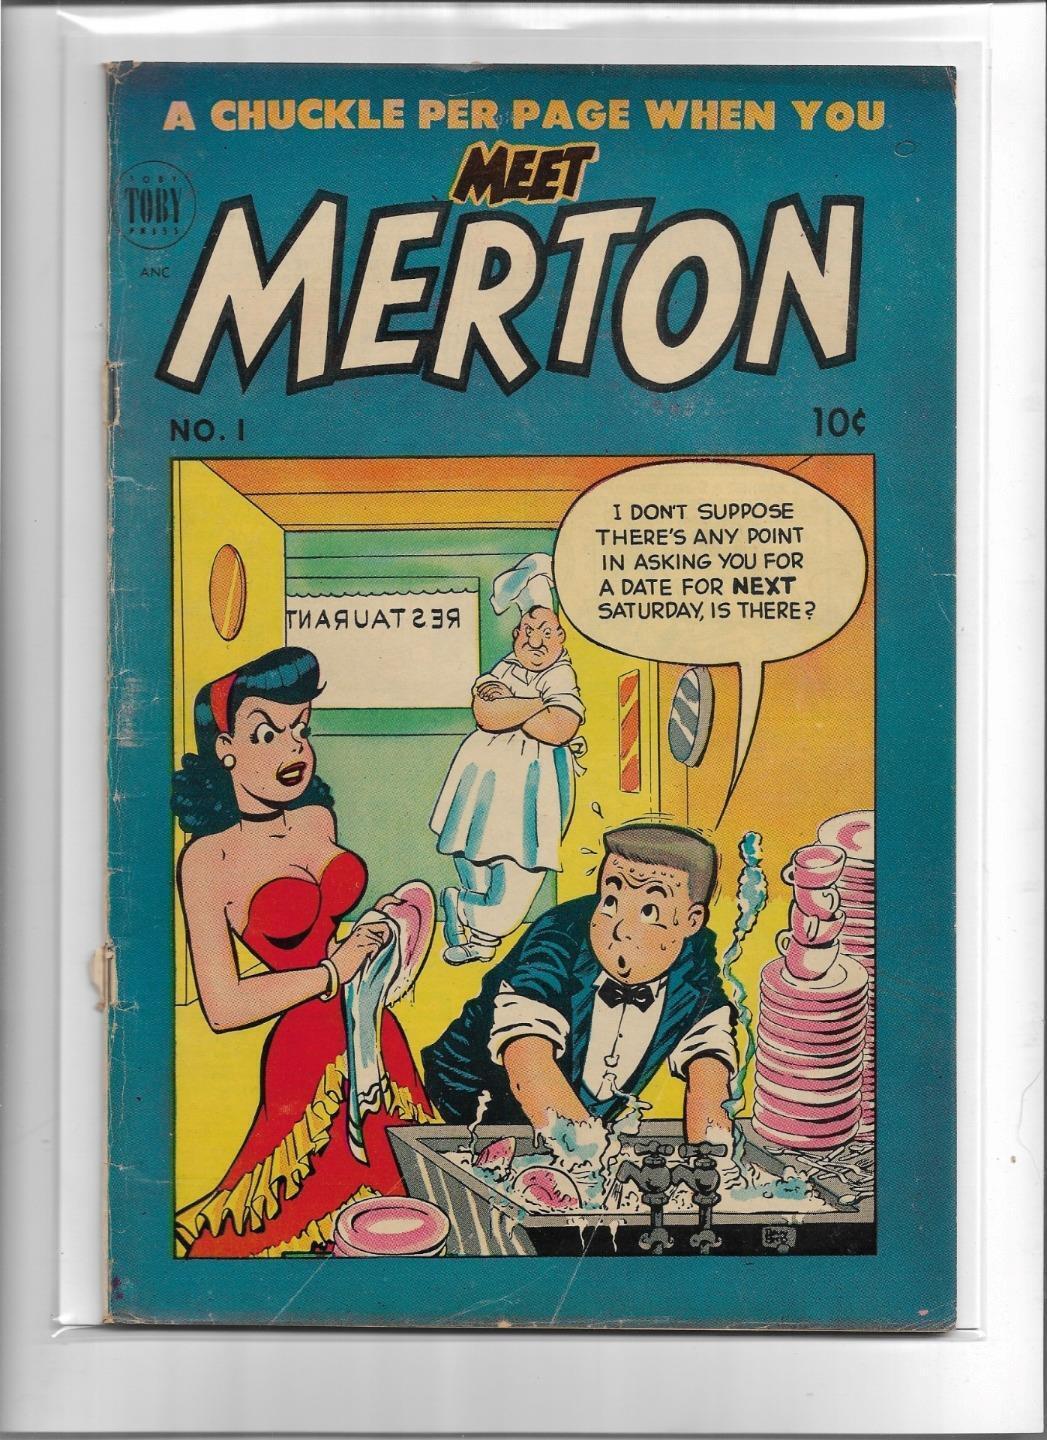 MERTON #1 1953 VERY GOOD- 3.5 3924